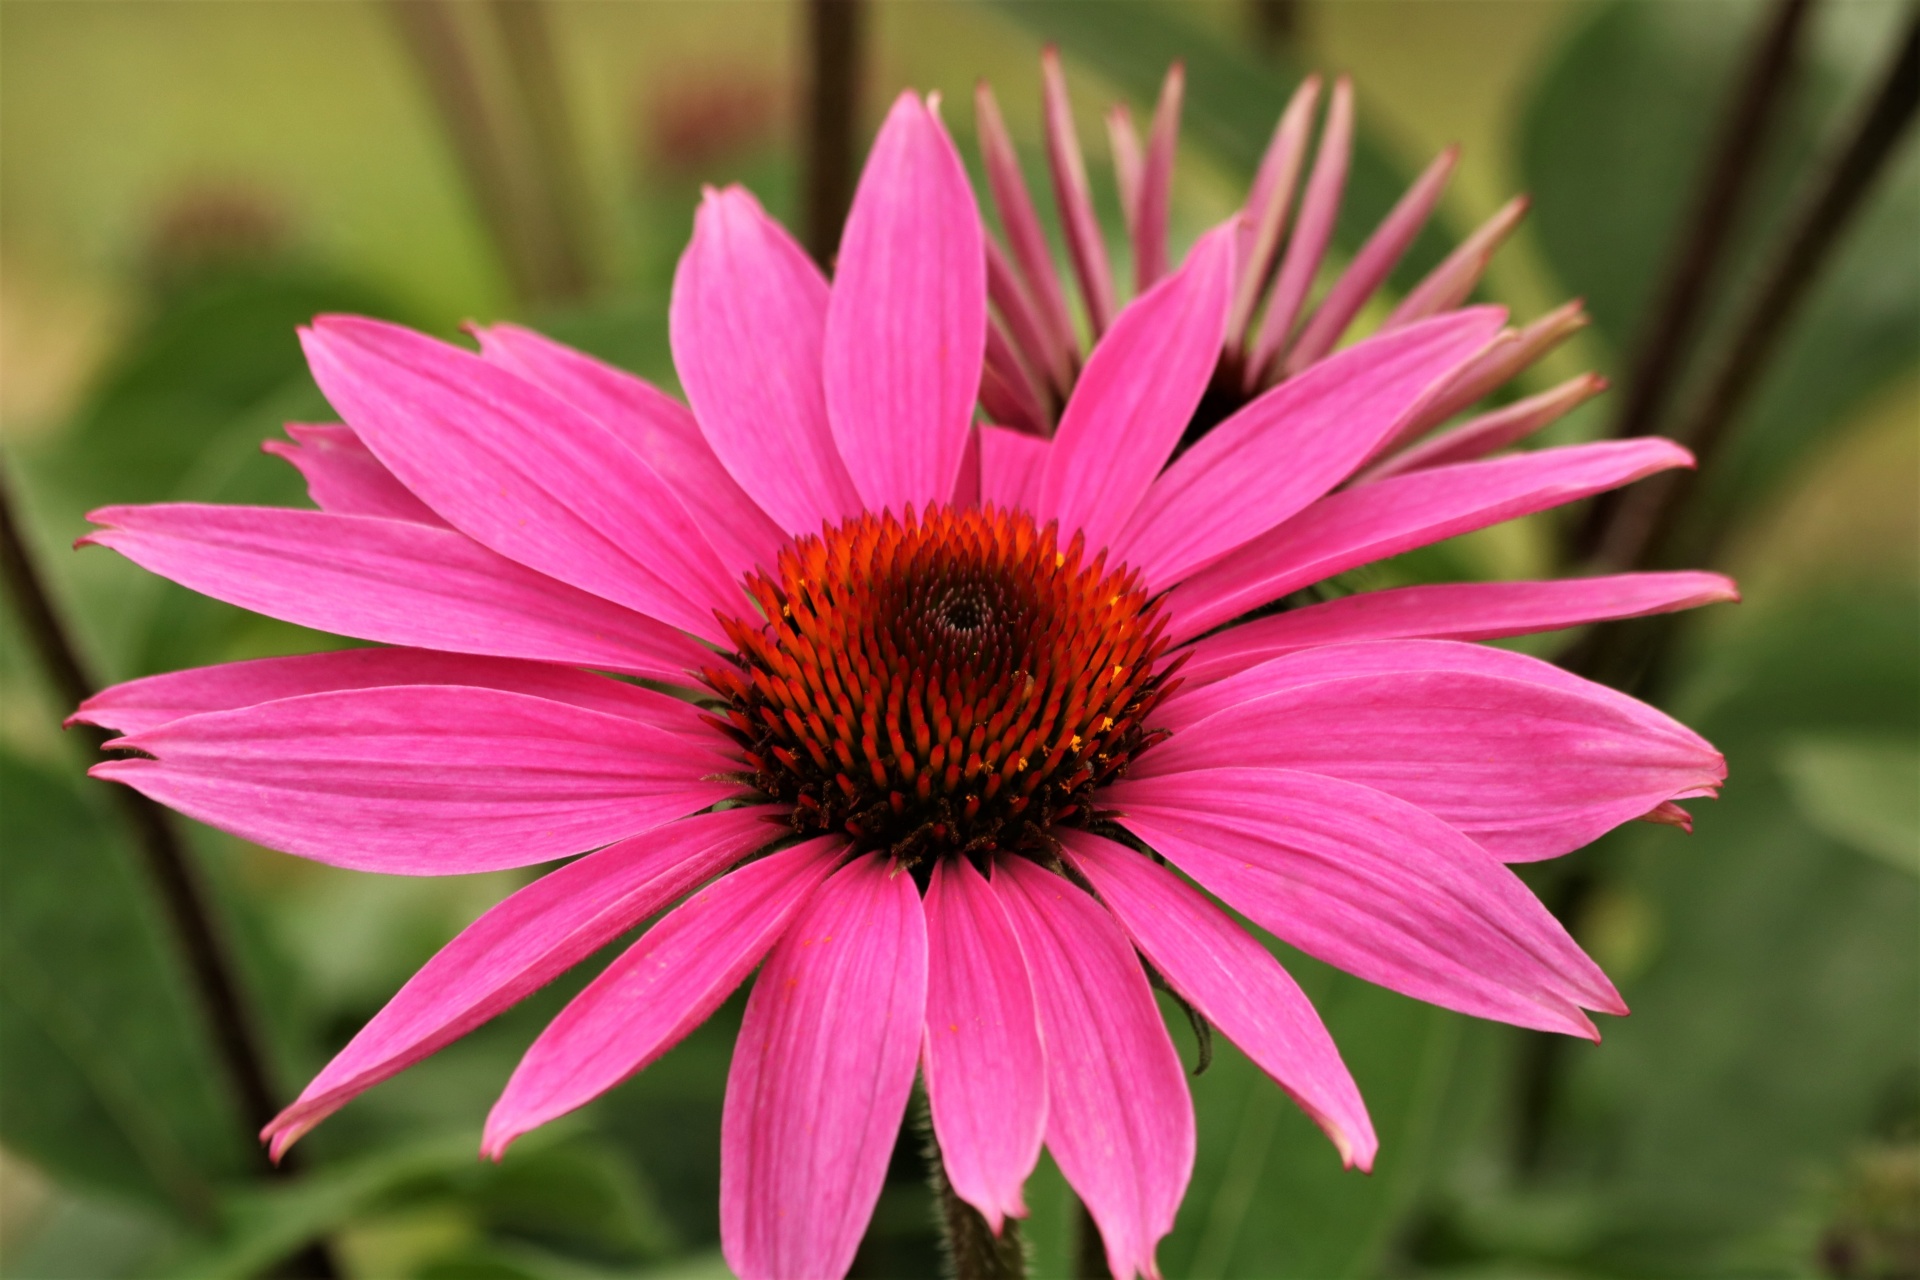 Pink Coneflower Close-up